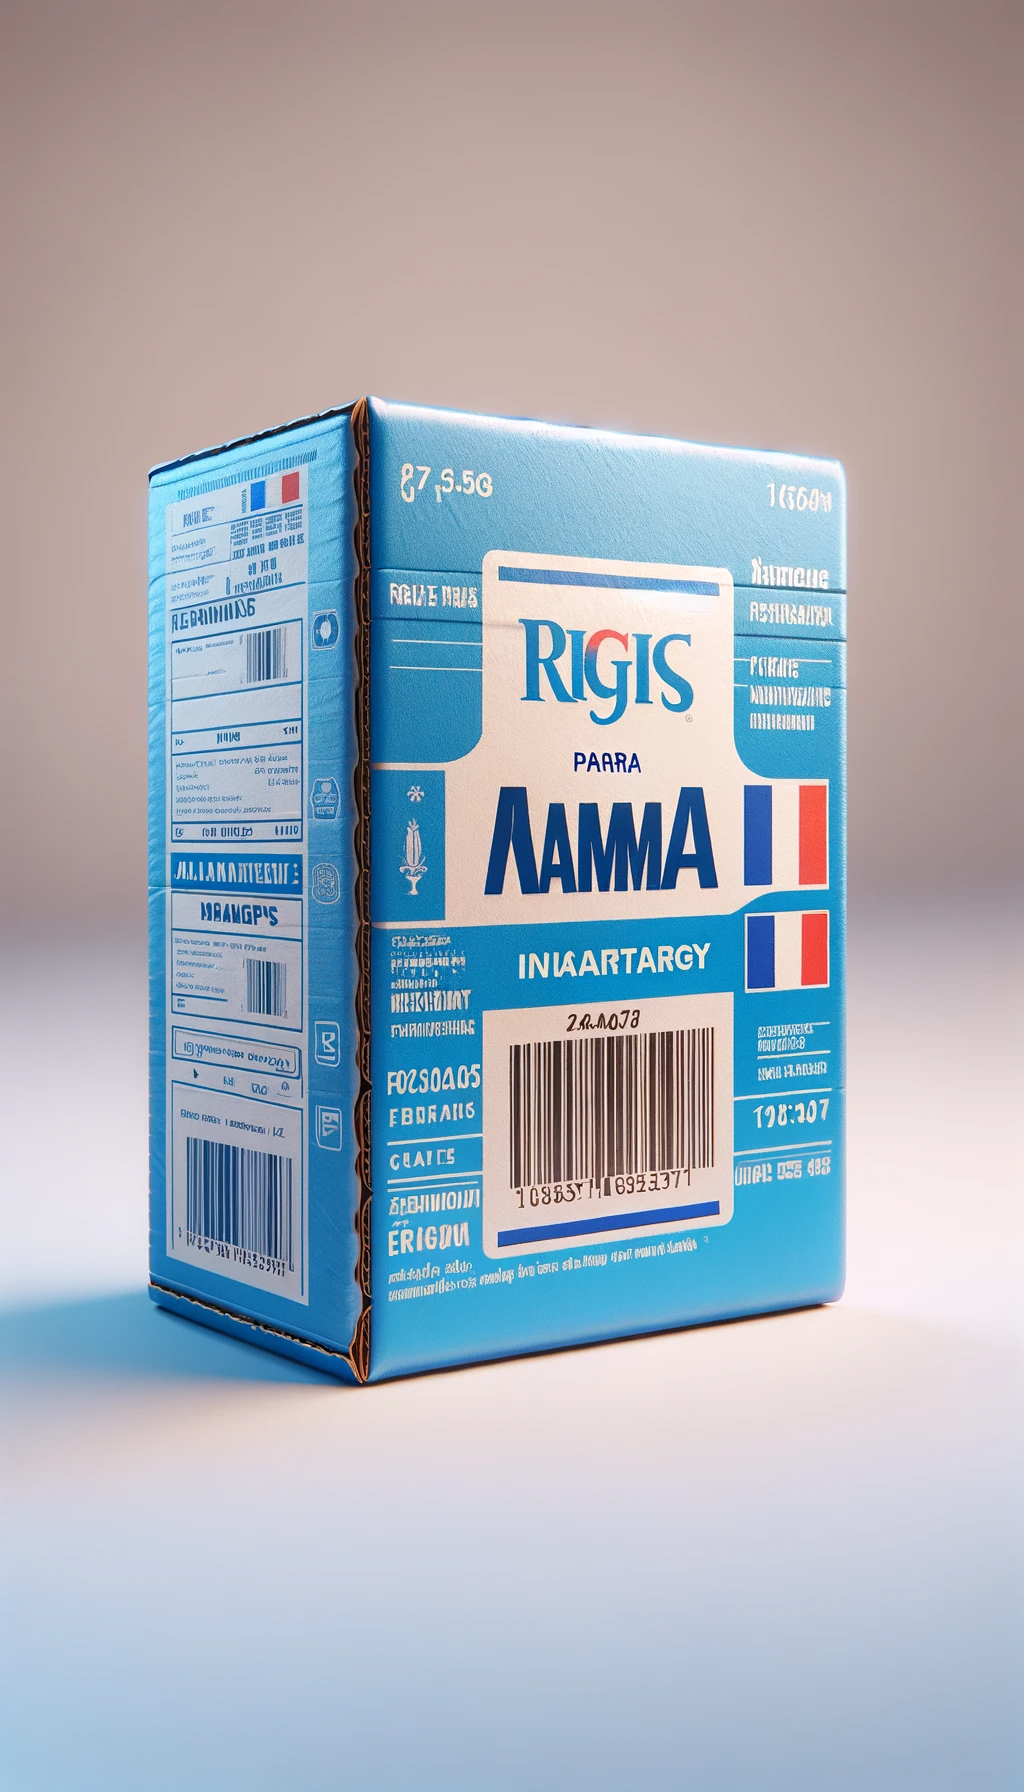 Acheter kamagra oral jelly en belgique